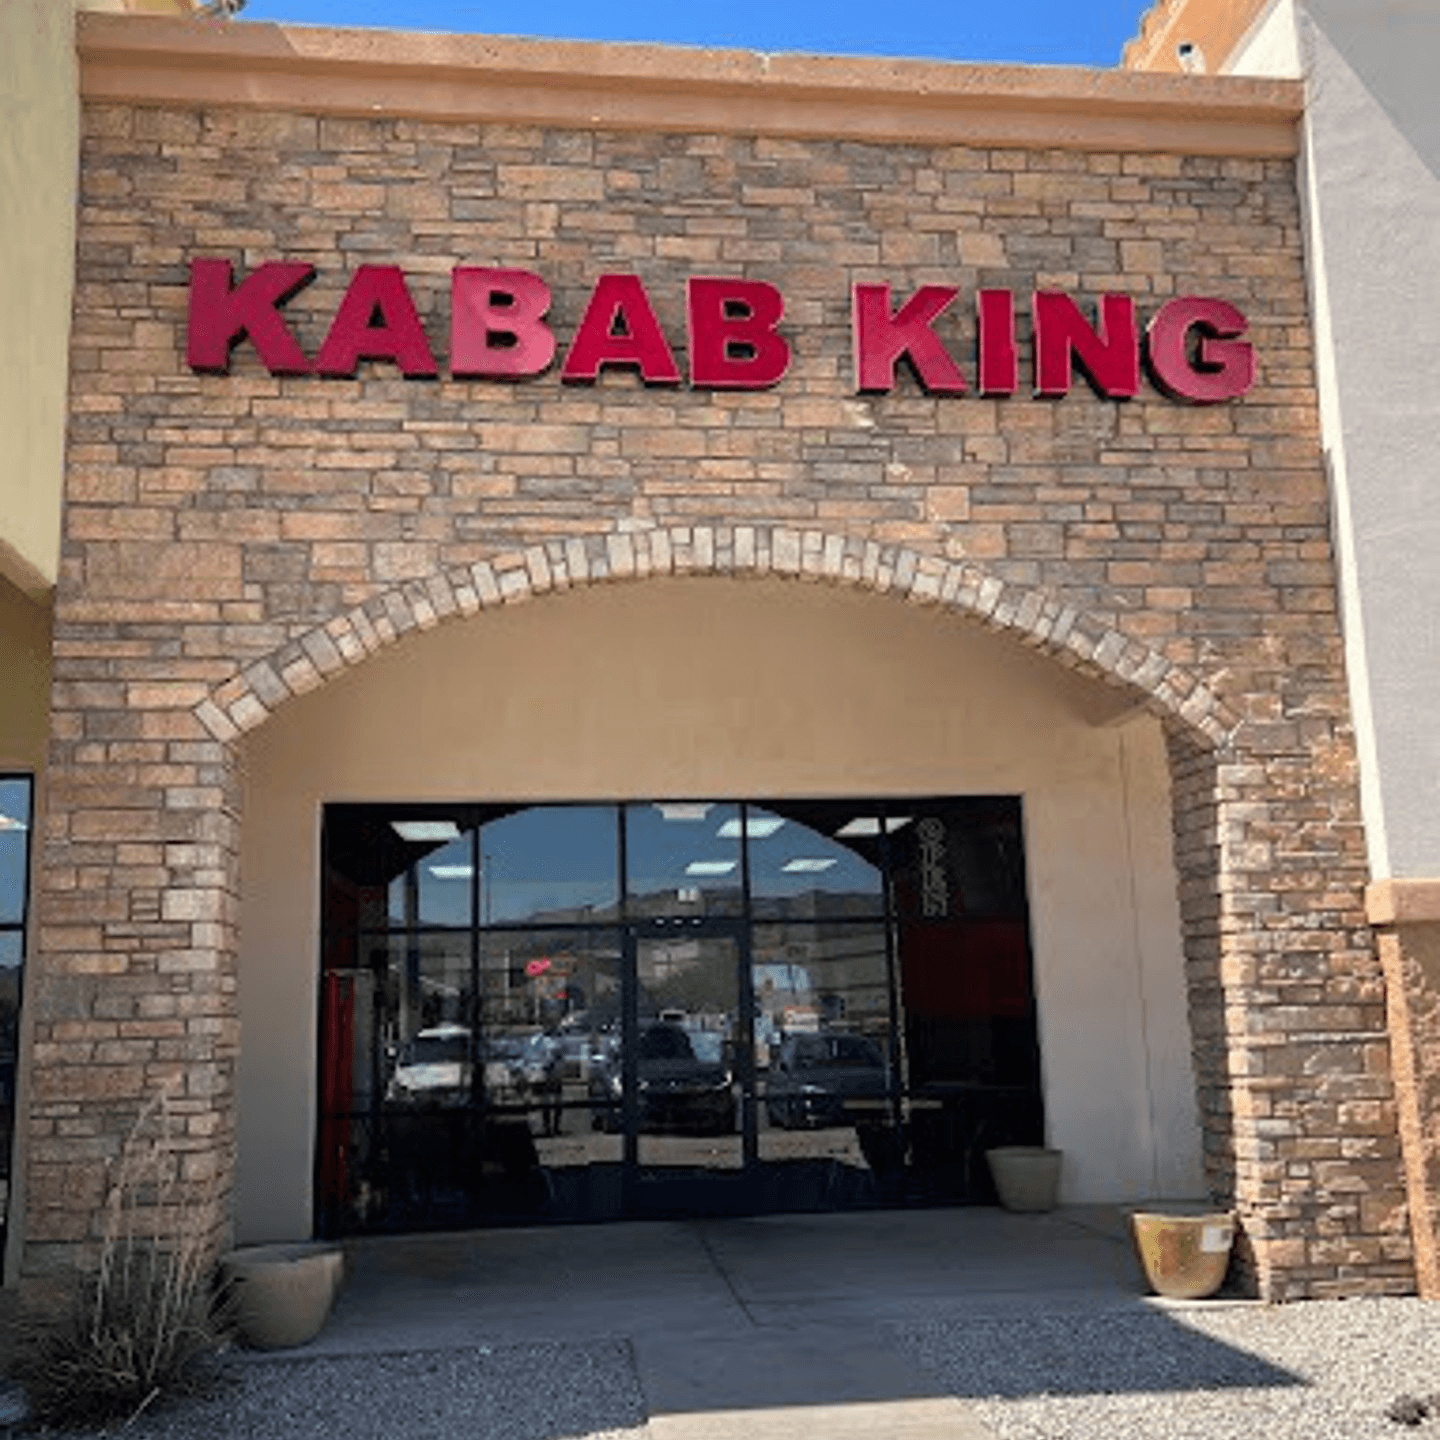 Welcome to Kabab King